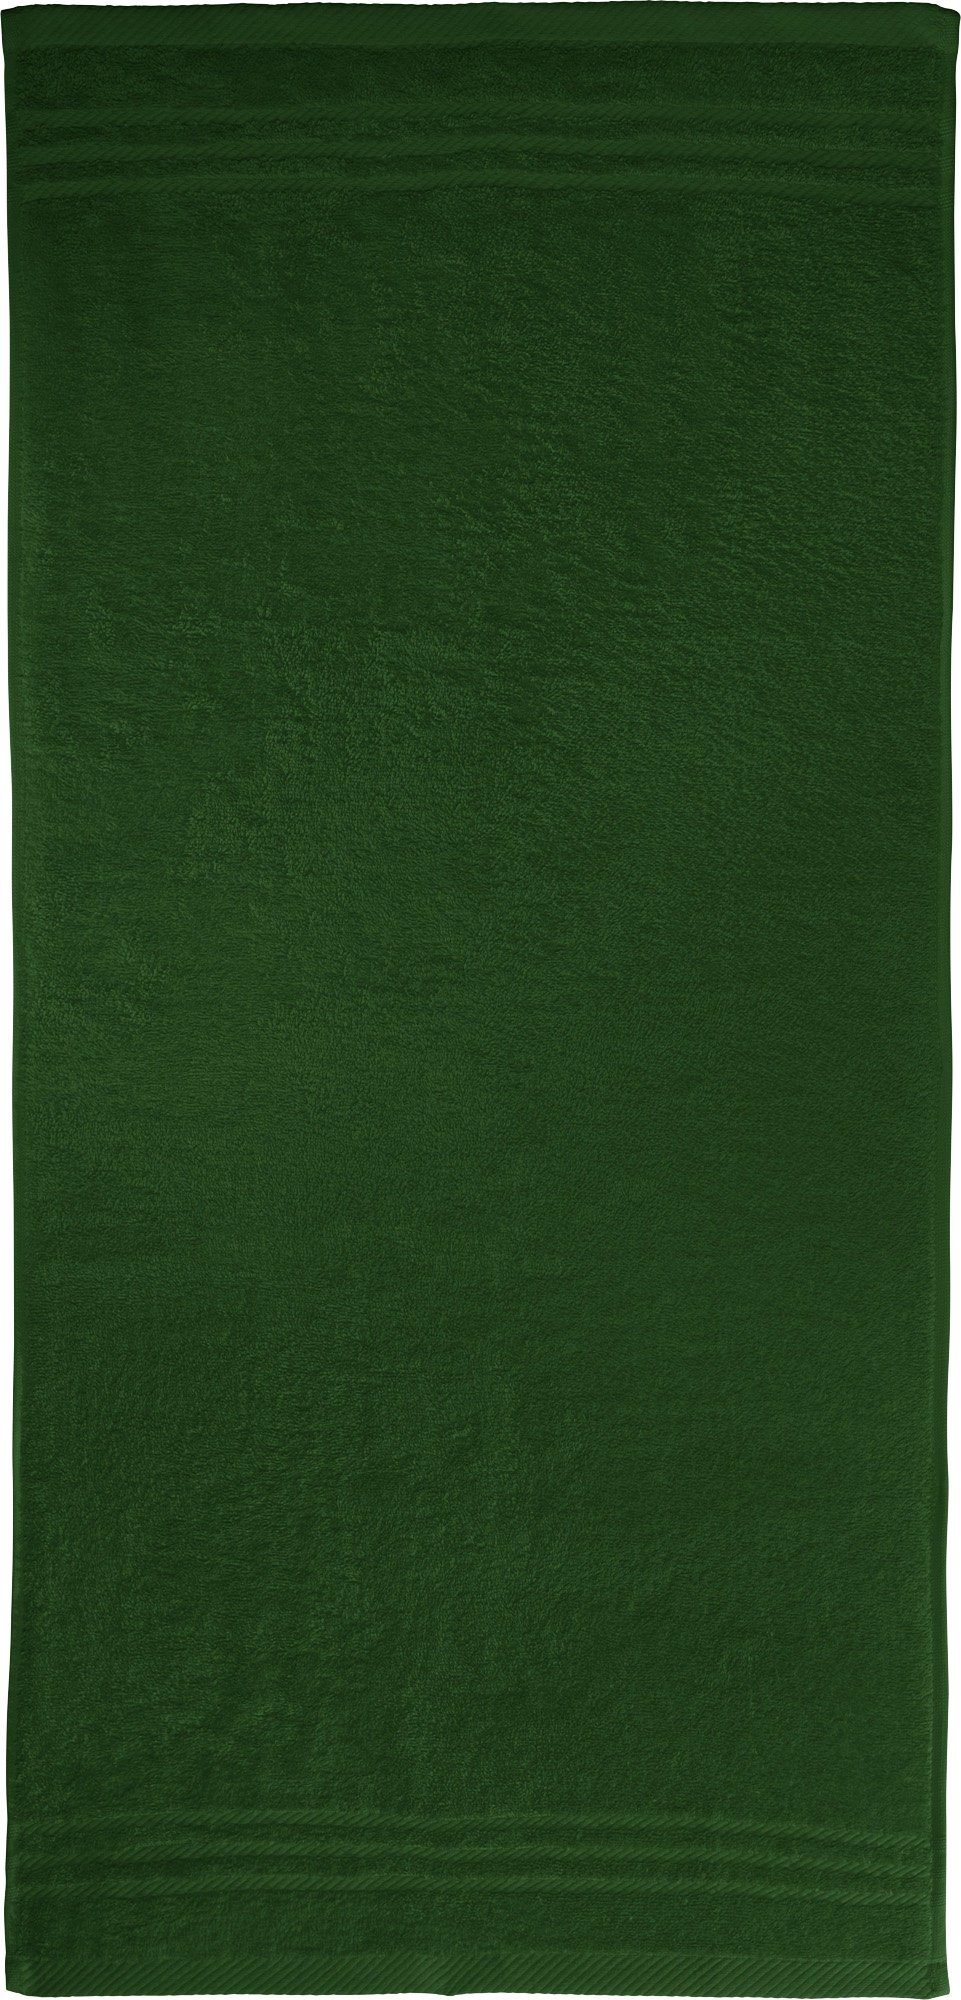 REDBEST Handtuch Handtuch, Frottier (1-St), Walk-Frottier Uni dunkelgrün